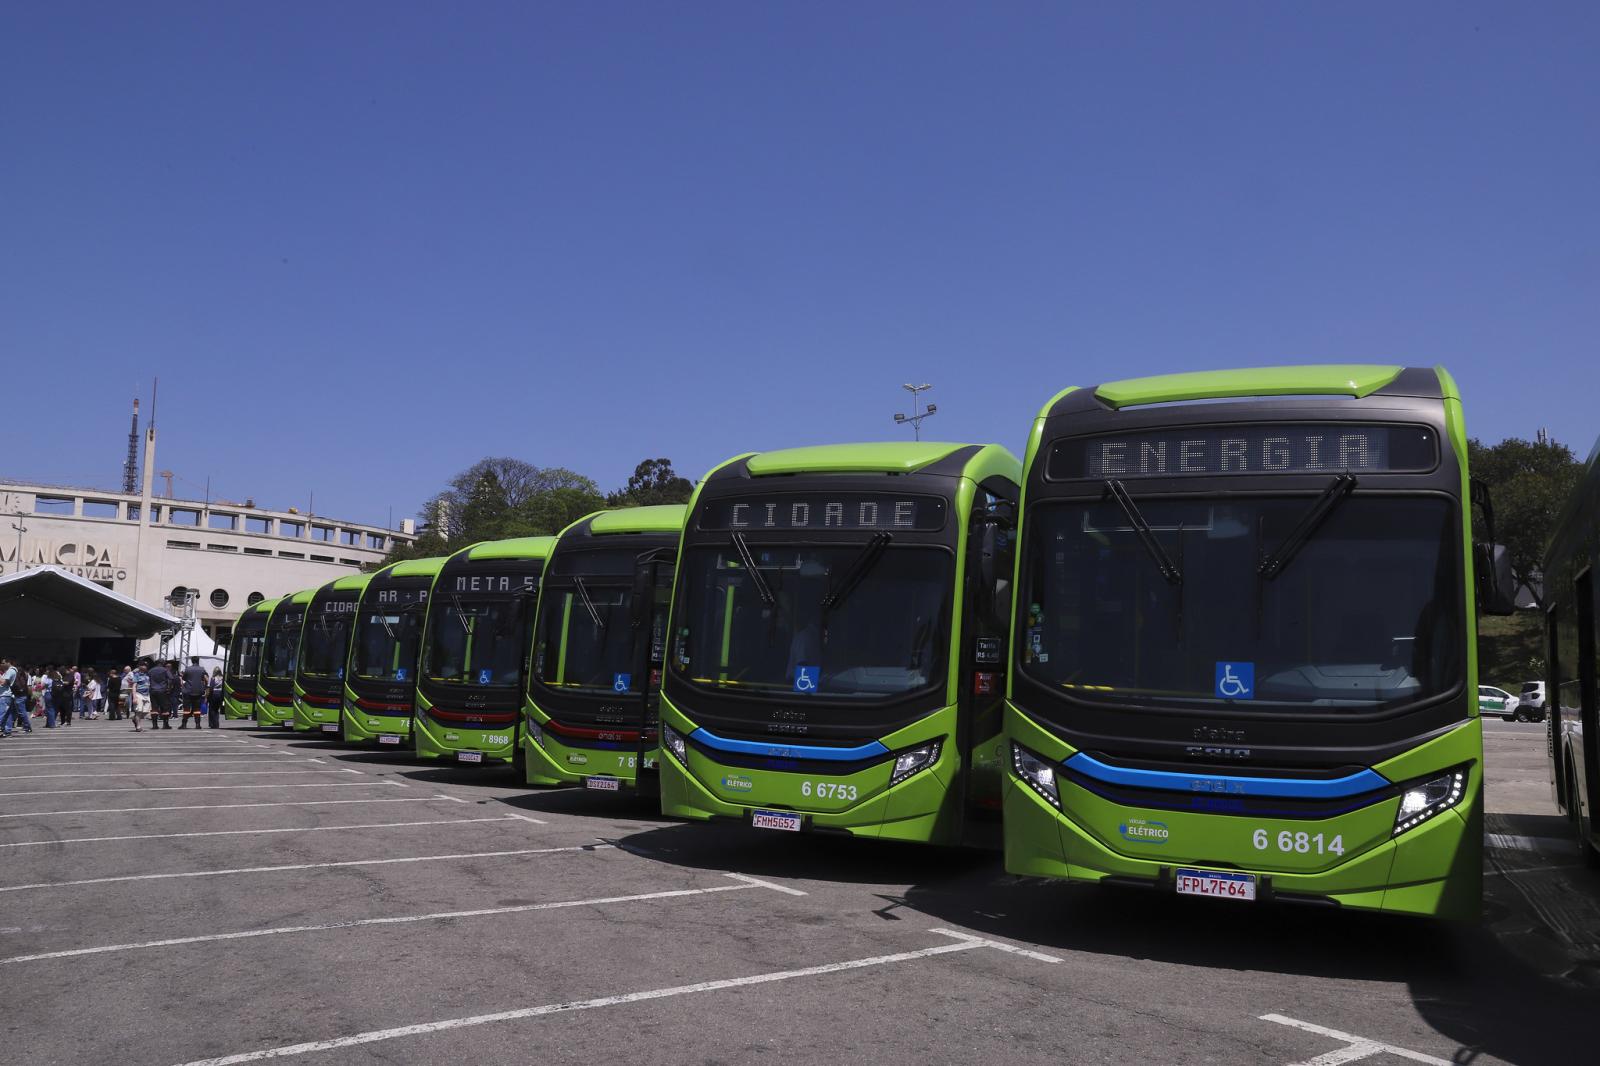 Capital paulista anuncia passe livre nos ônibus aos domingos